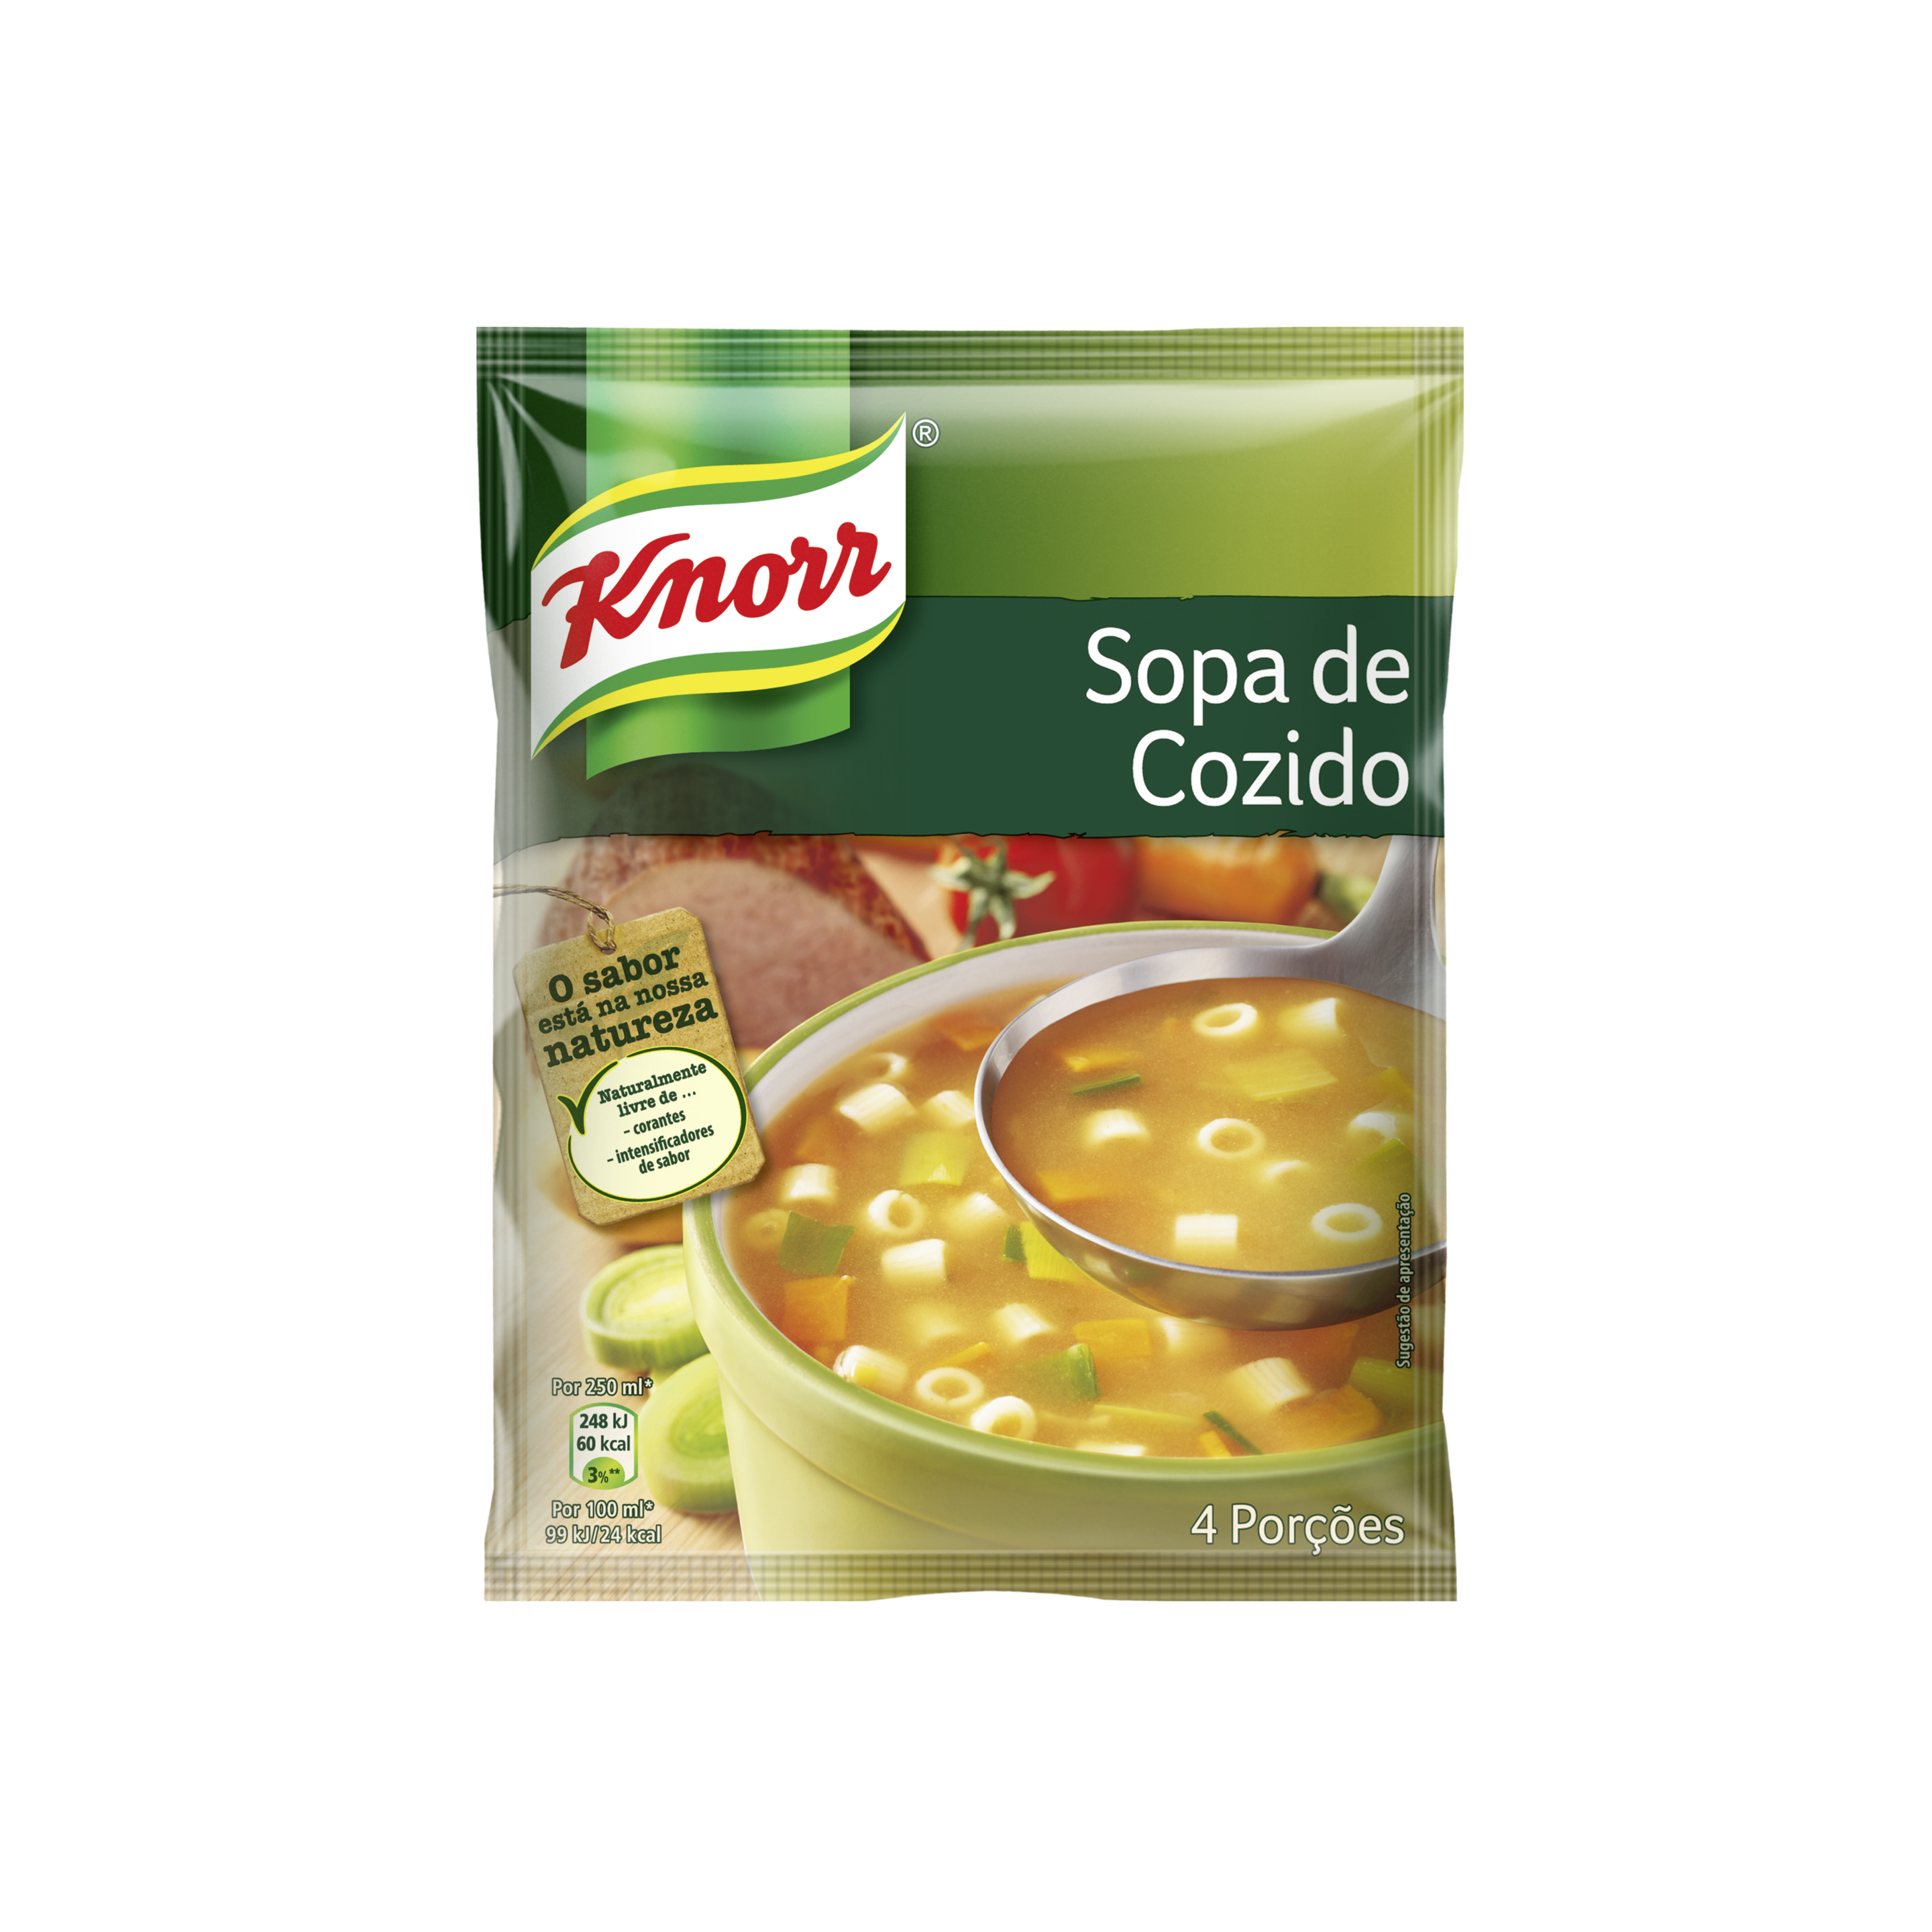 Sopa de Cozido